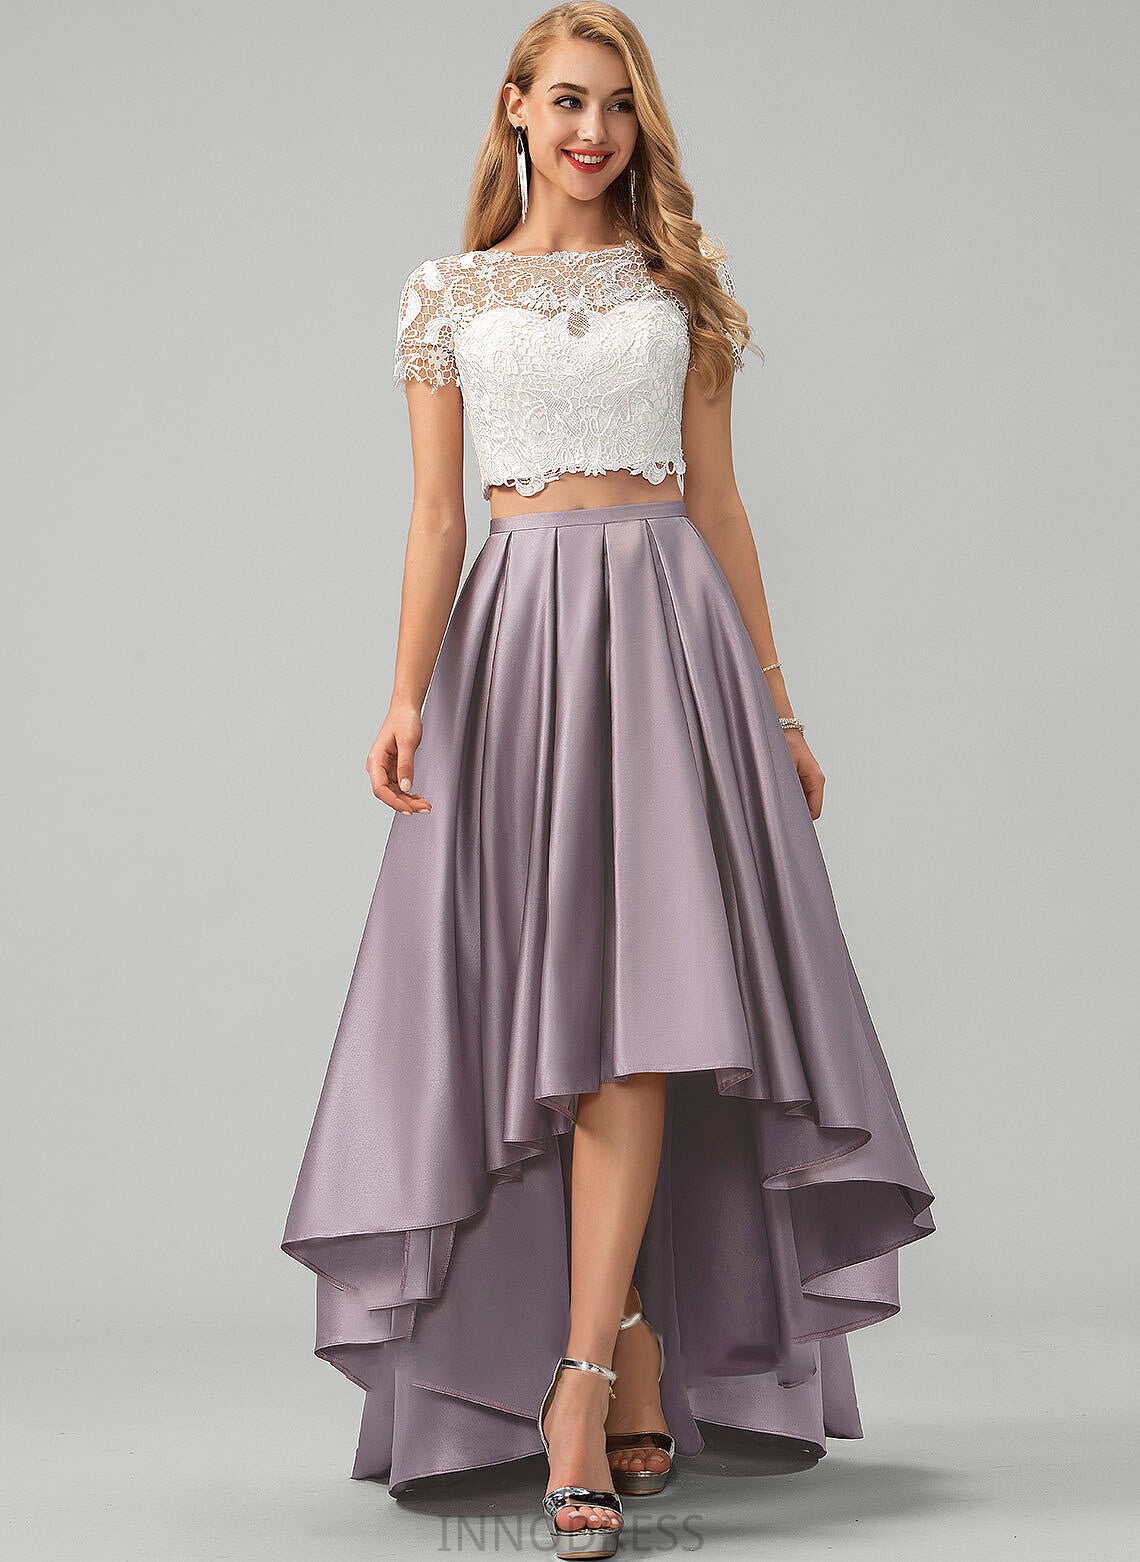 Pockets Prom Dresses Scoop Lace A-Line Satin With Asymmetrical Celeste Neck